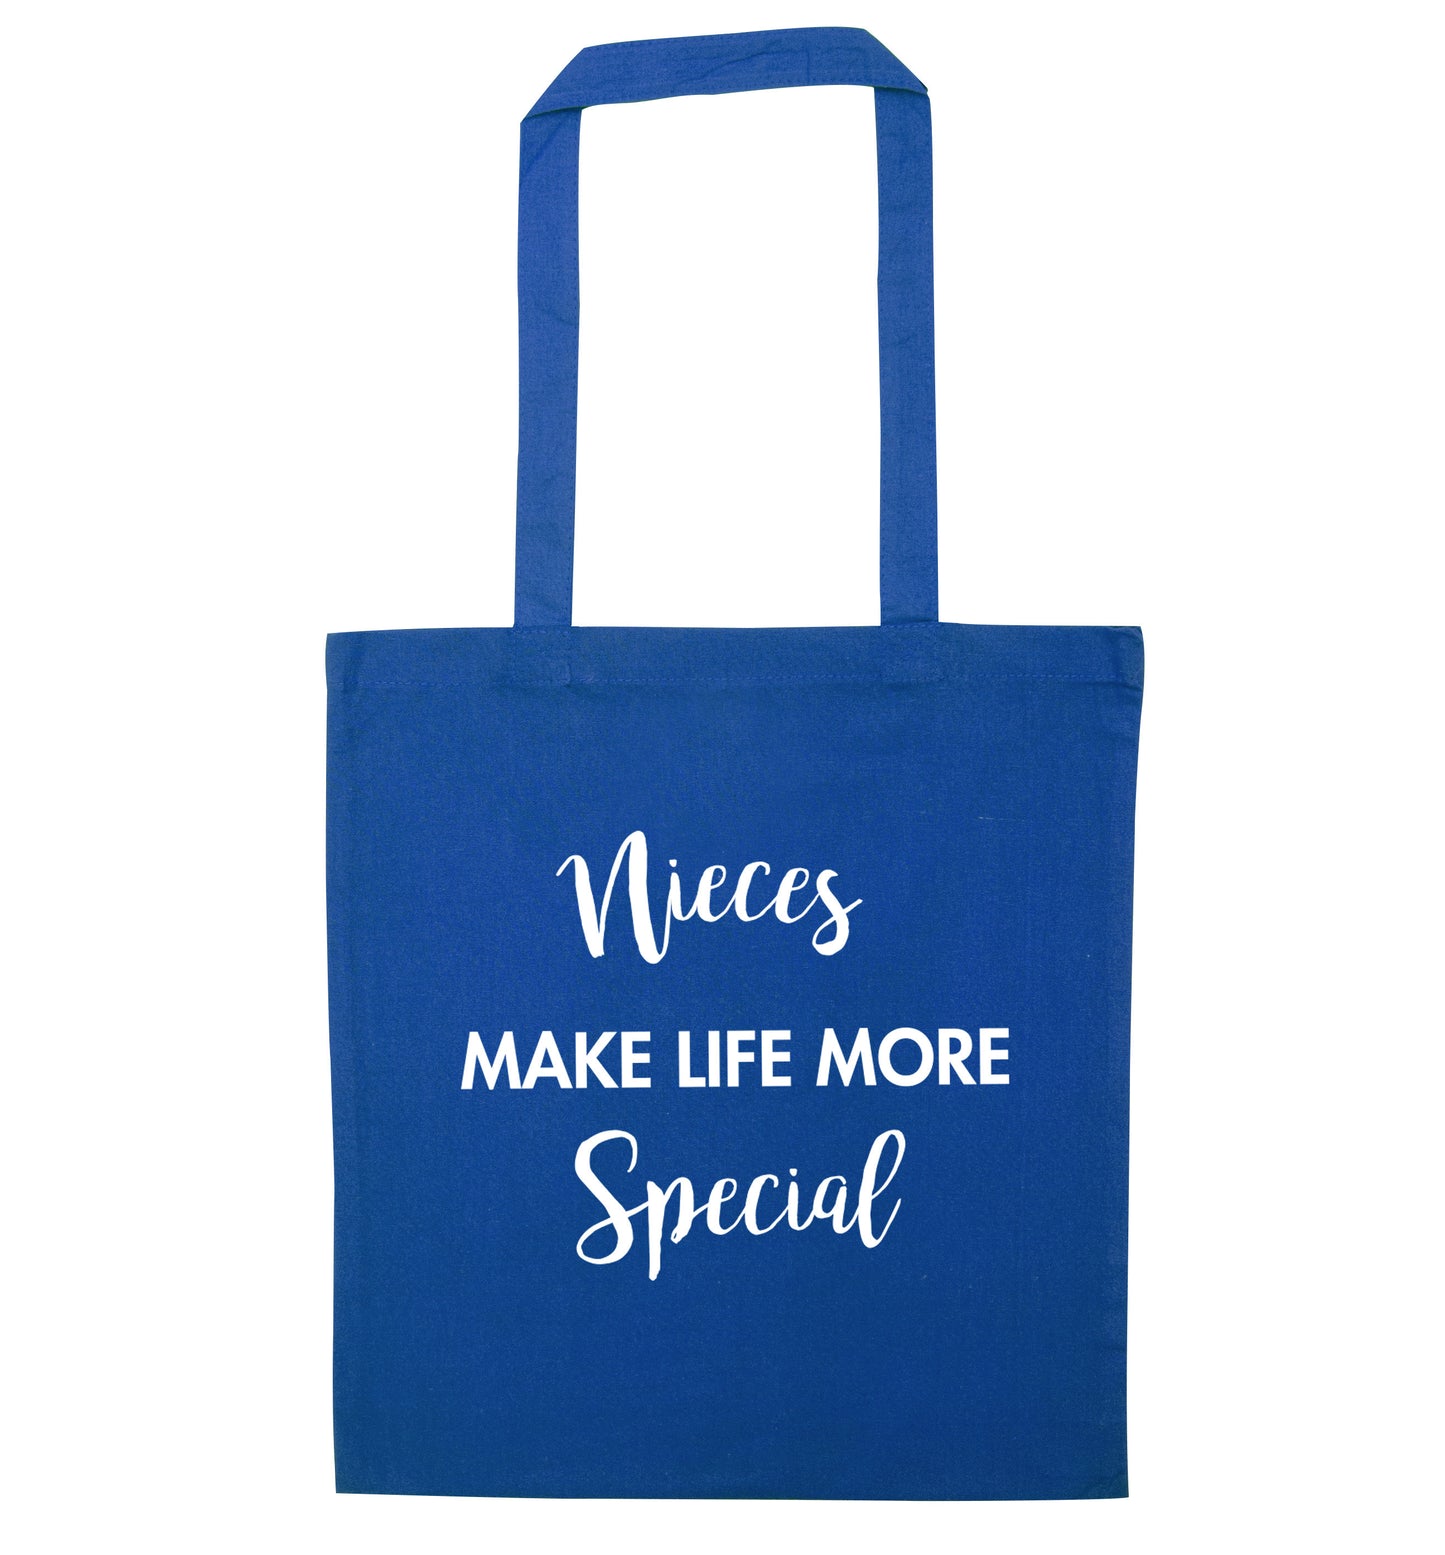 Nieces make life more special blue tote bag